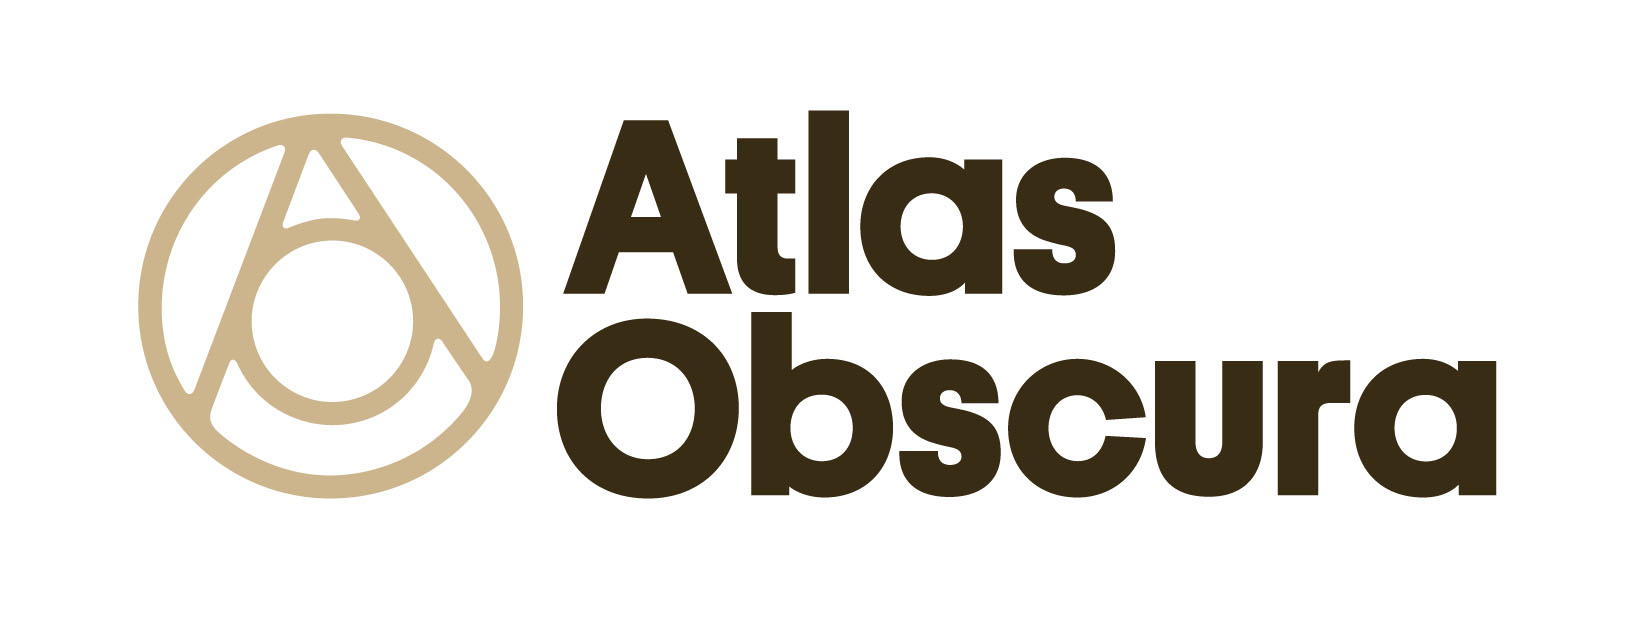 atlas obscura copy.jpg